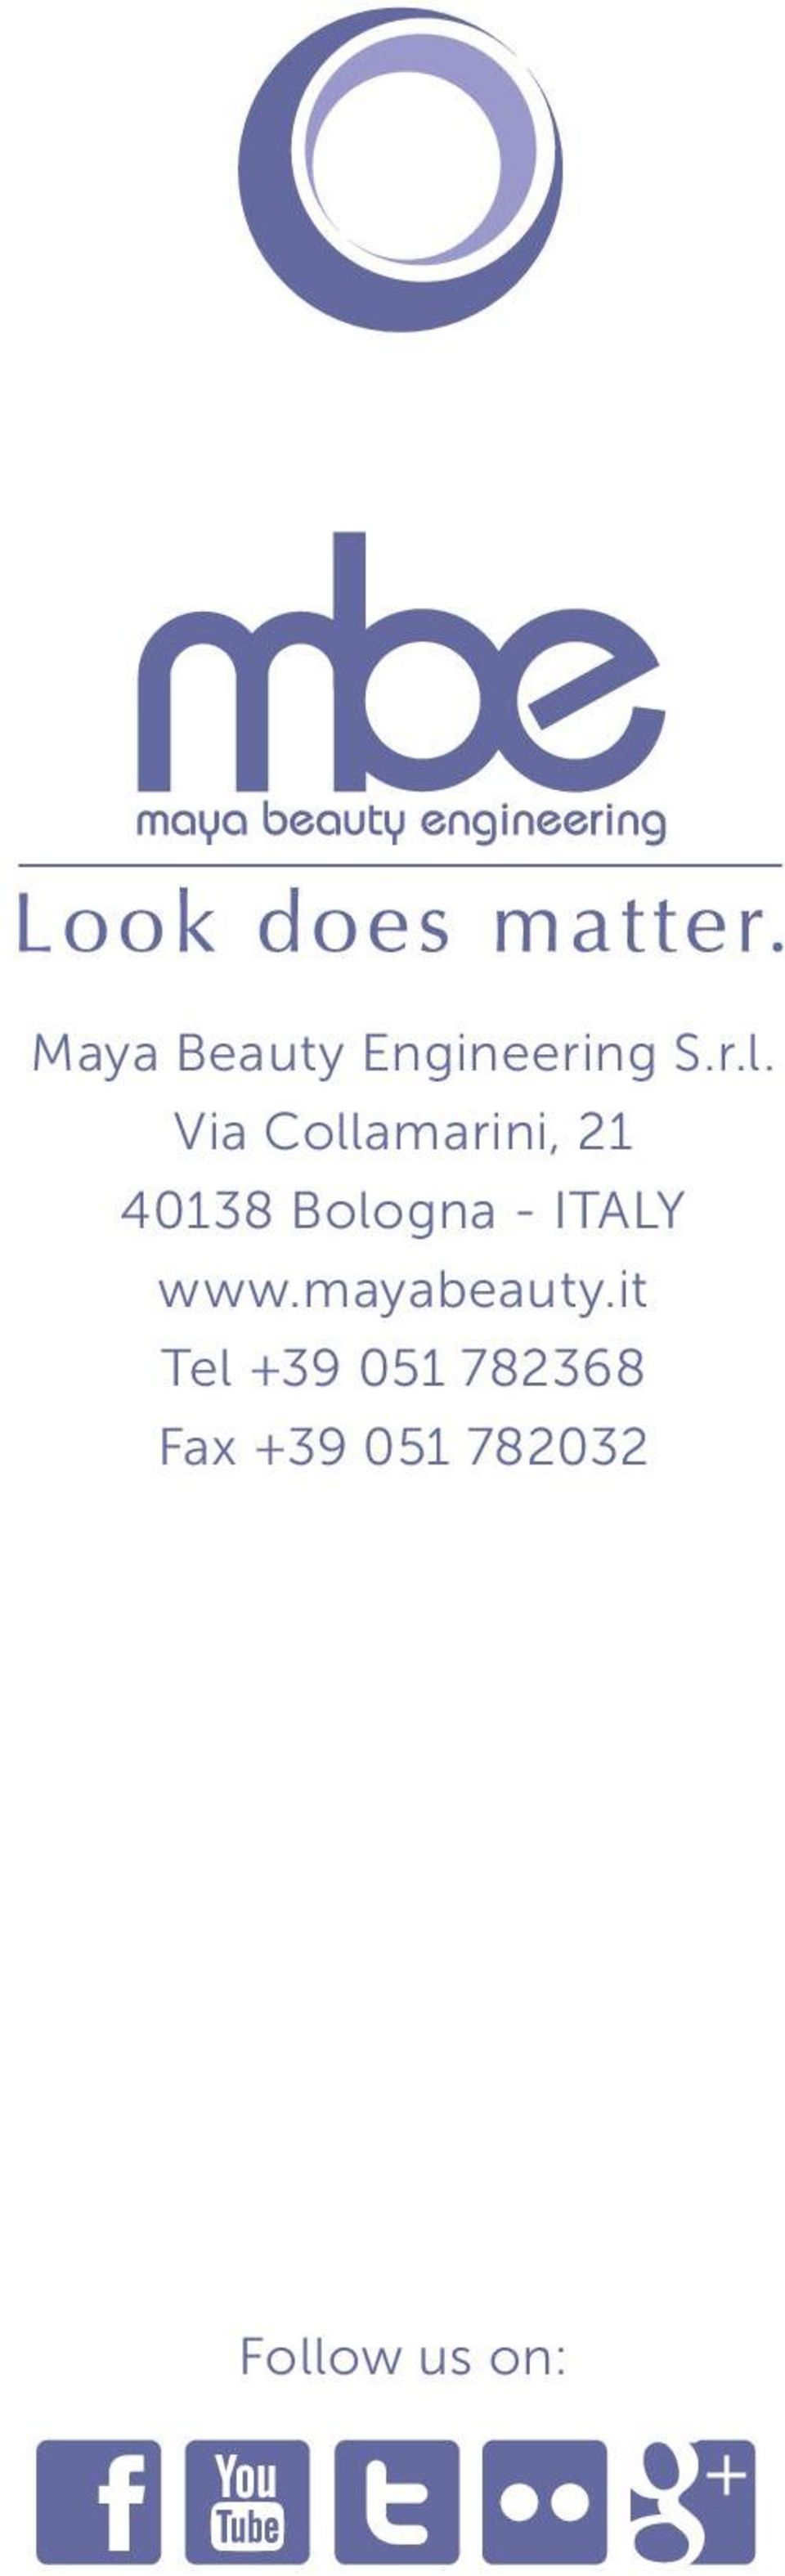 ITALY www.mayabeauty.